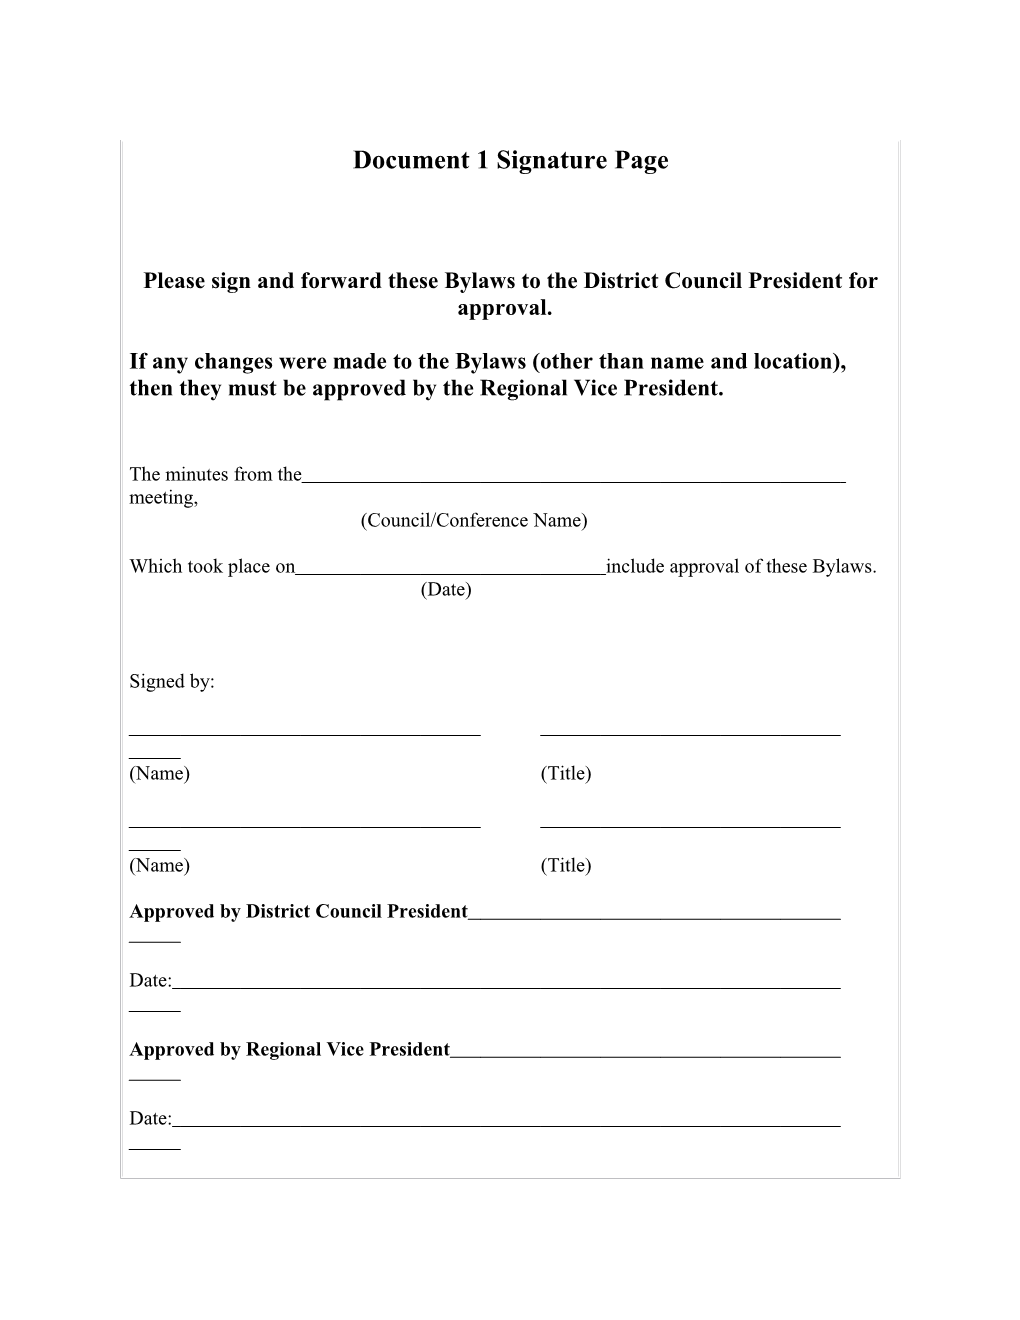 Document 1 Signature Page